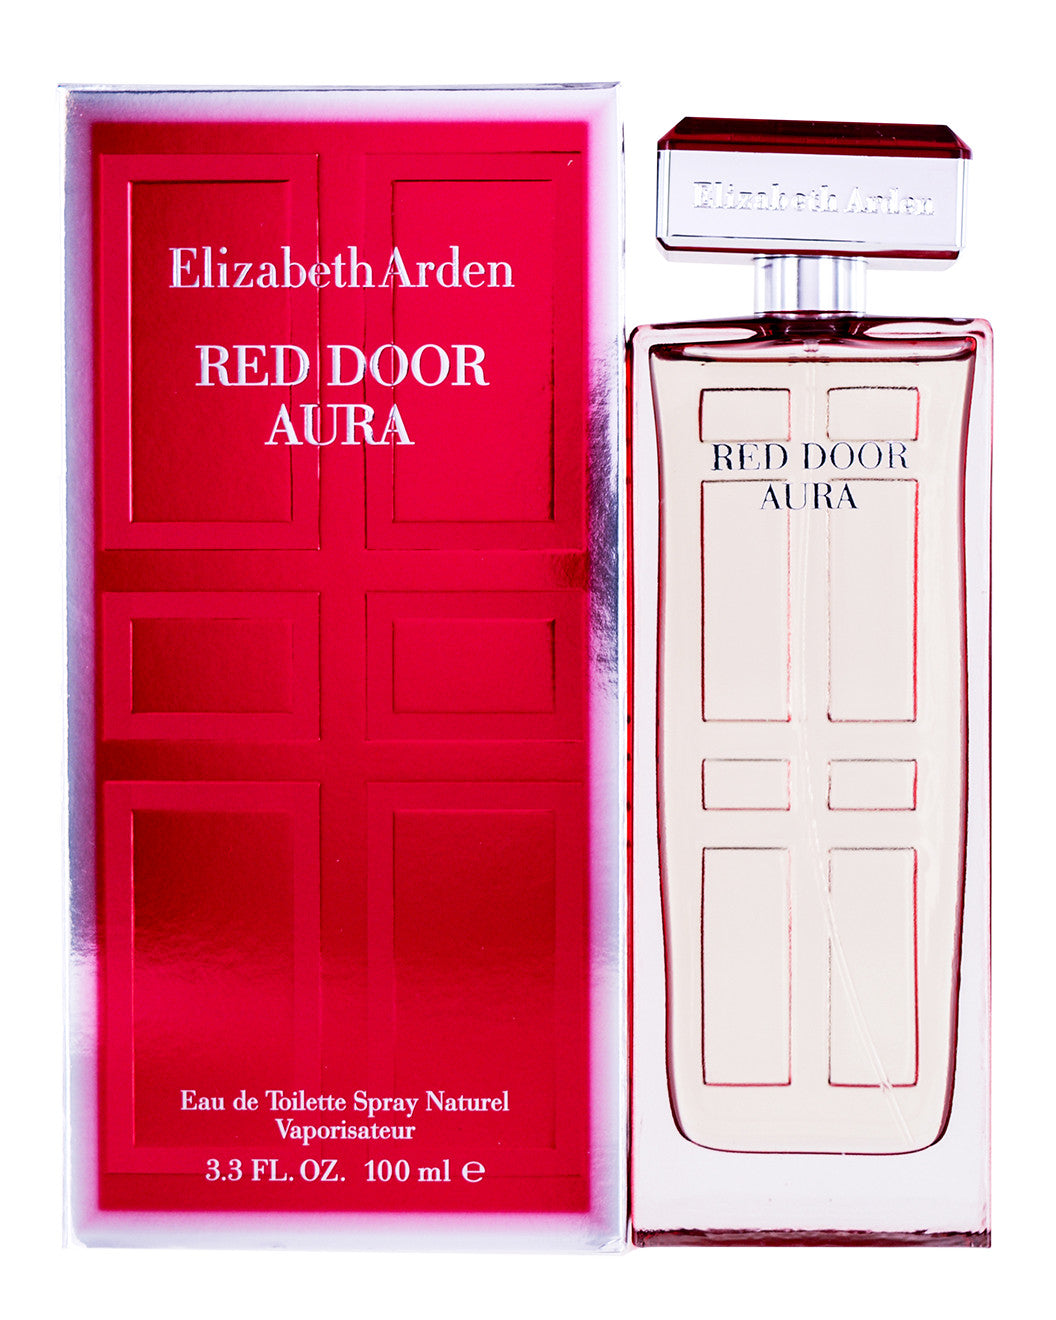 Red Door Aura by Elizabeth Arden eau de Toilette